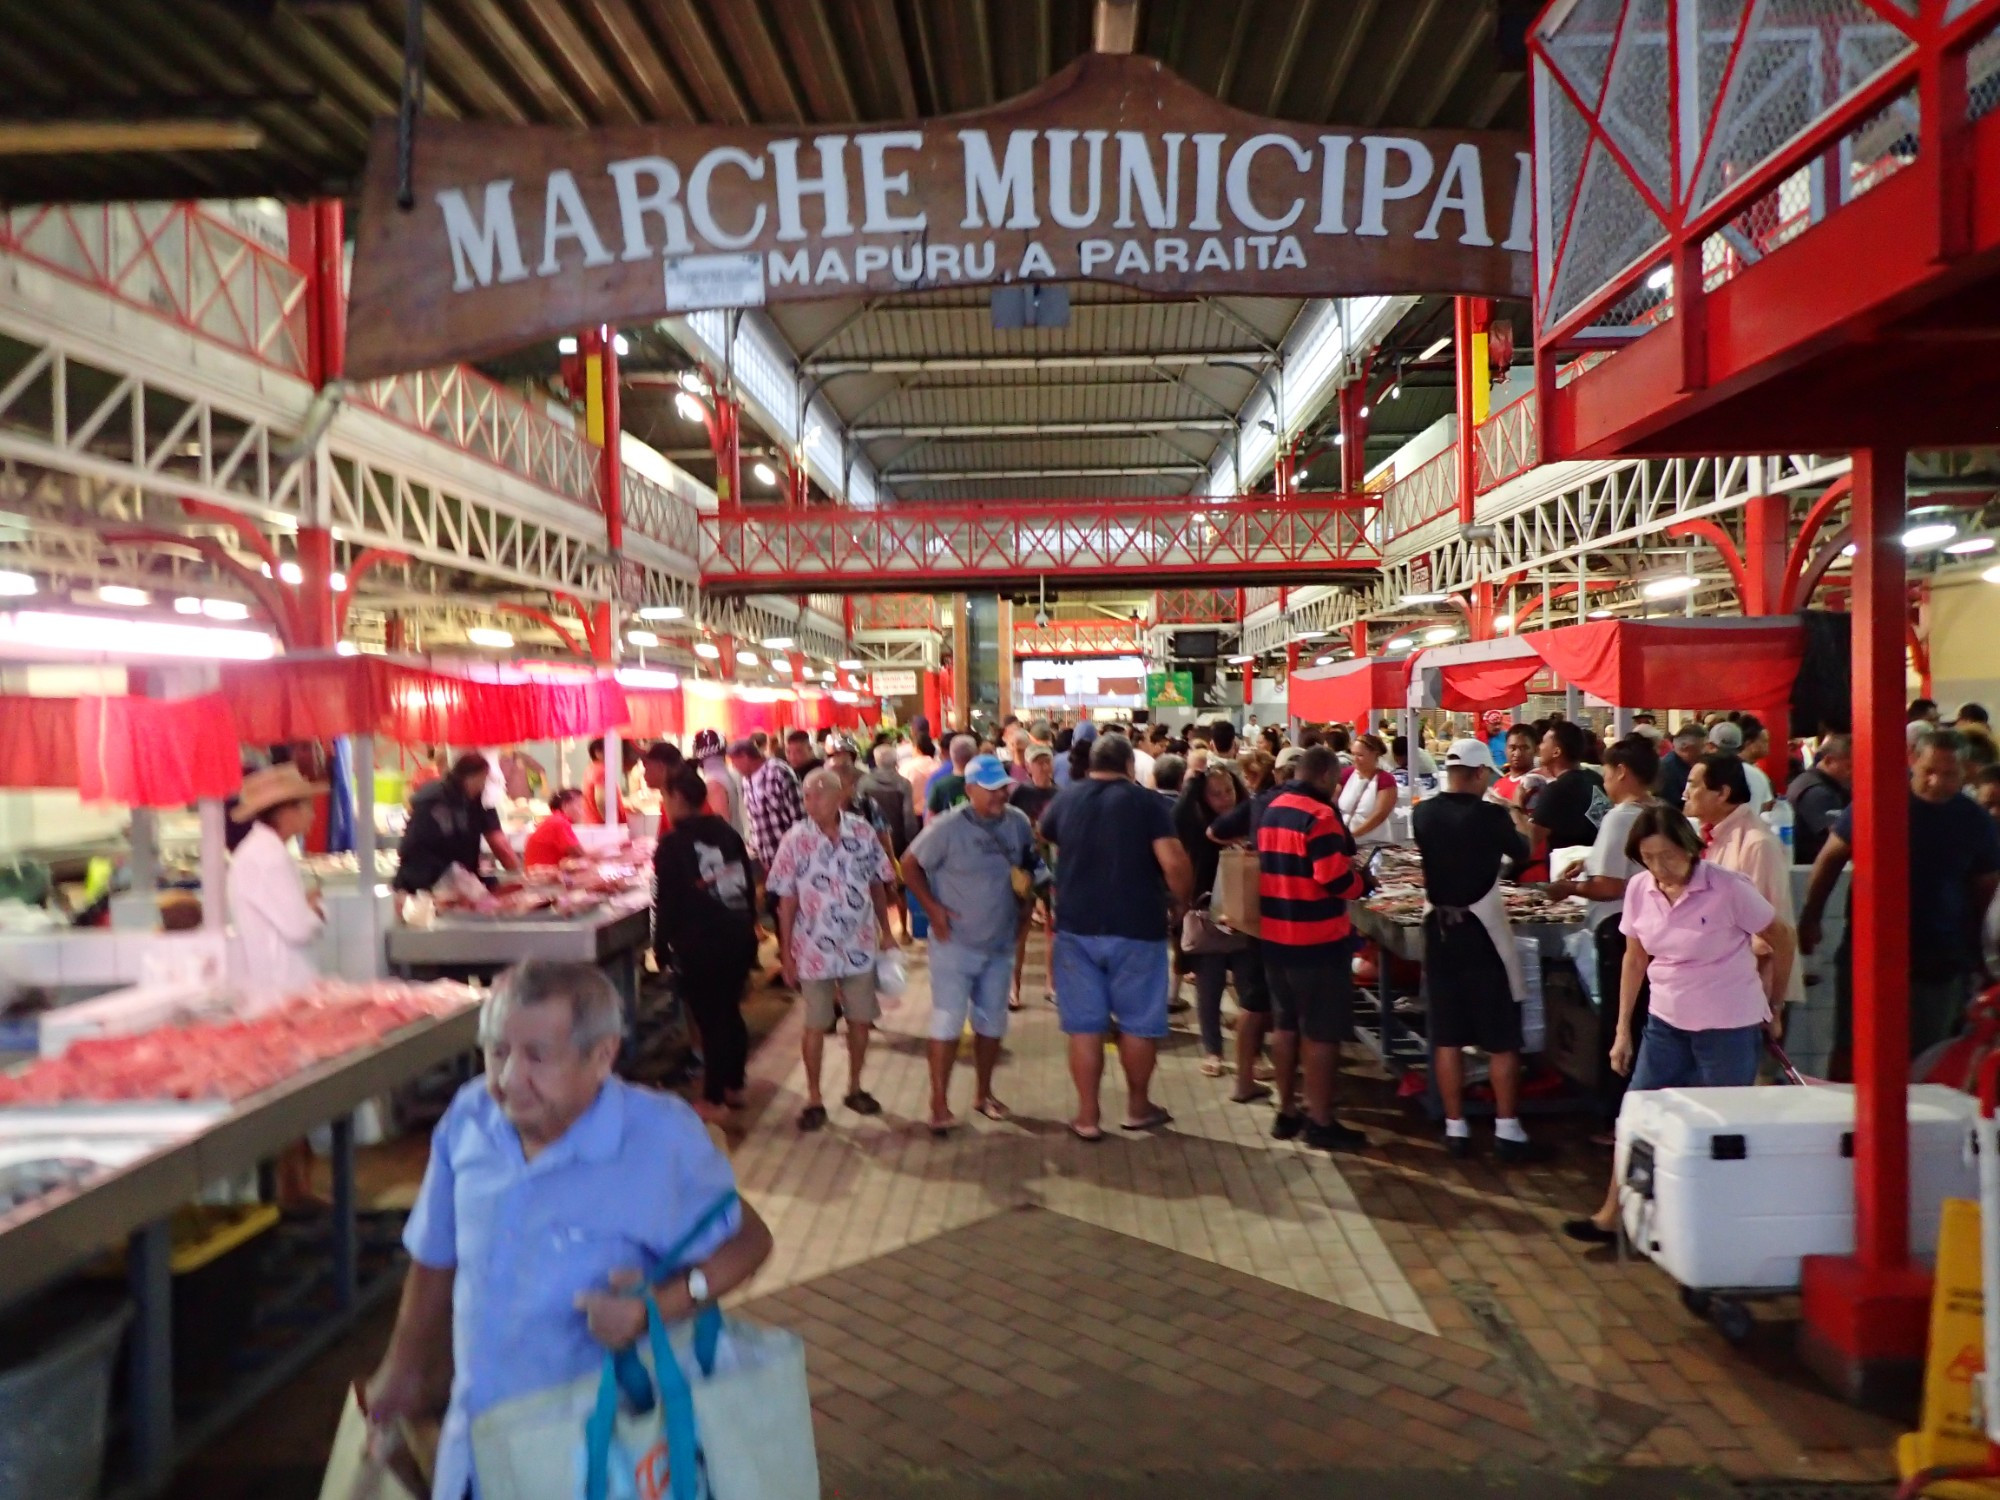 Papeete Municipal Market, Французская Полинезия